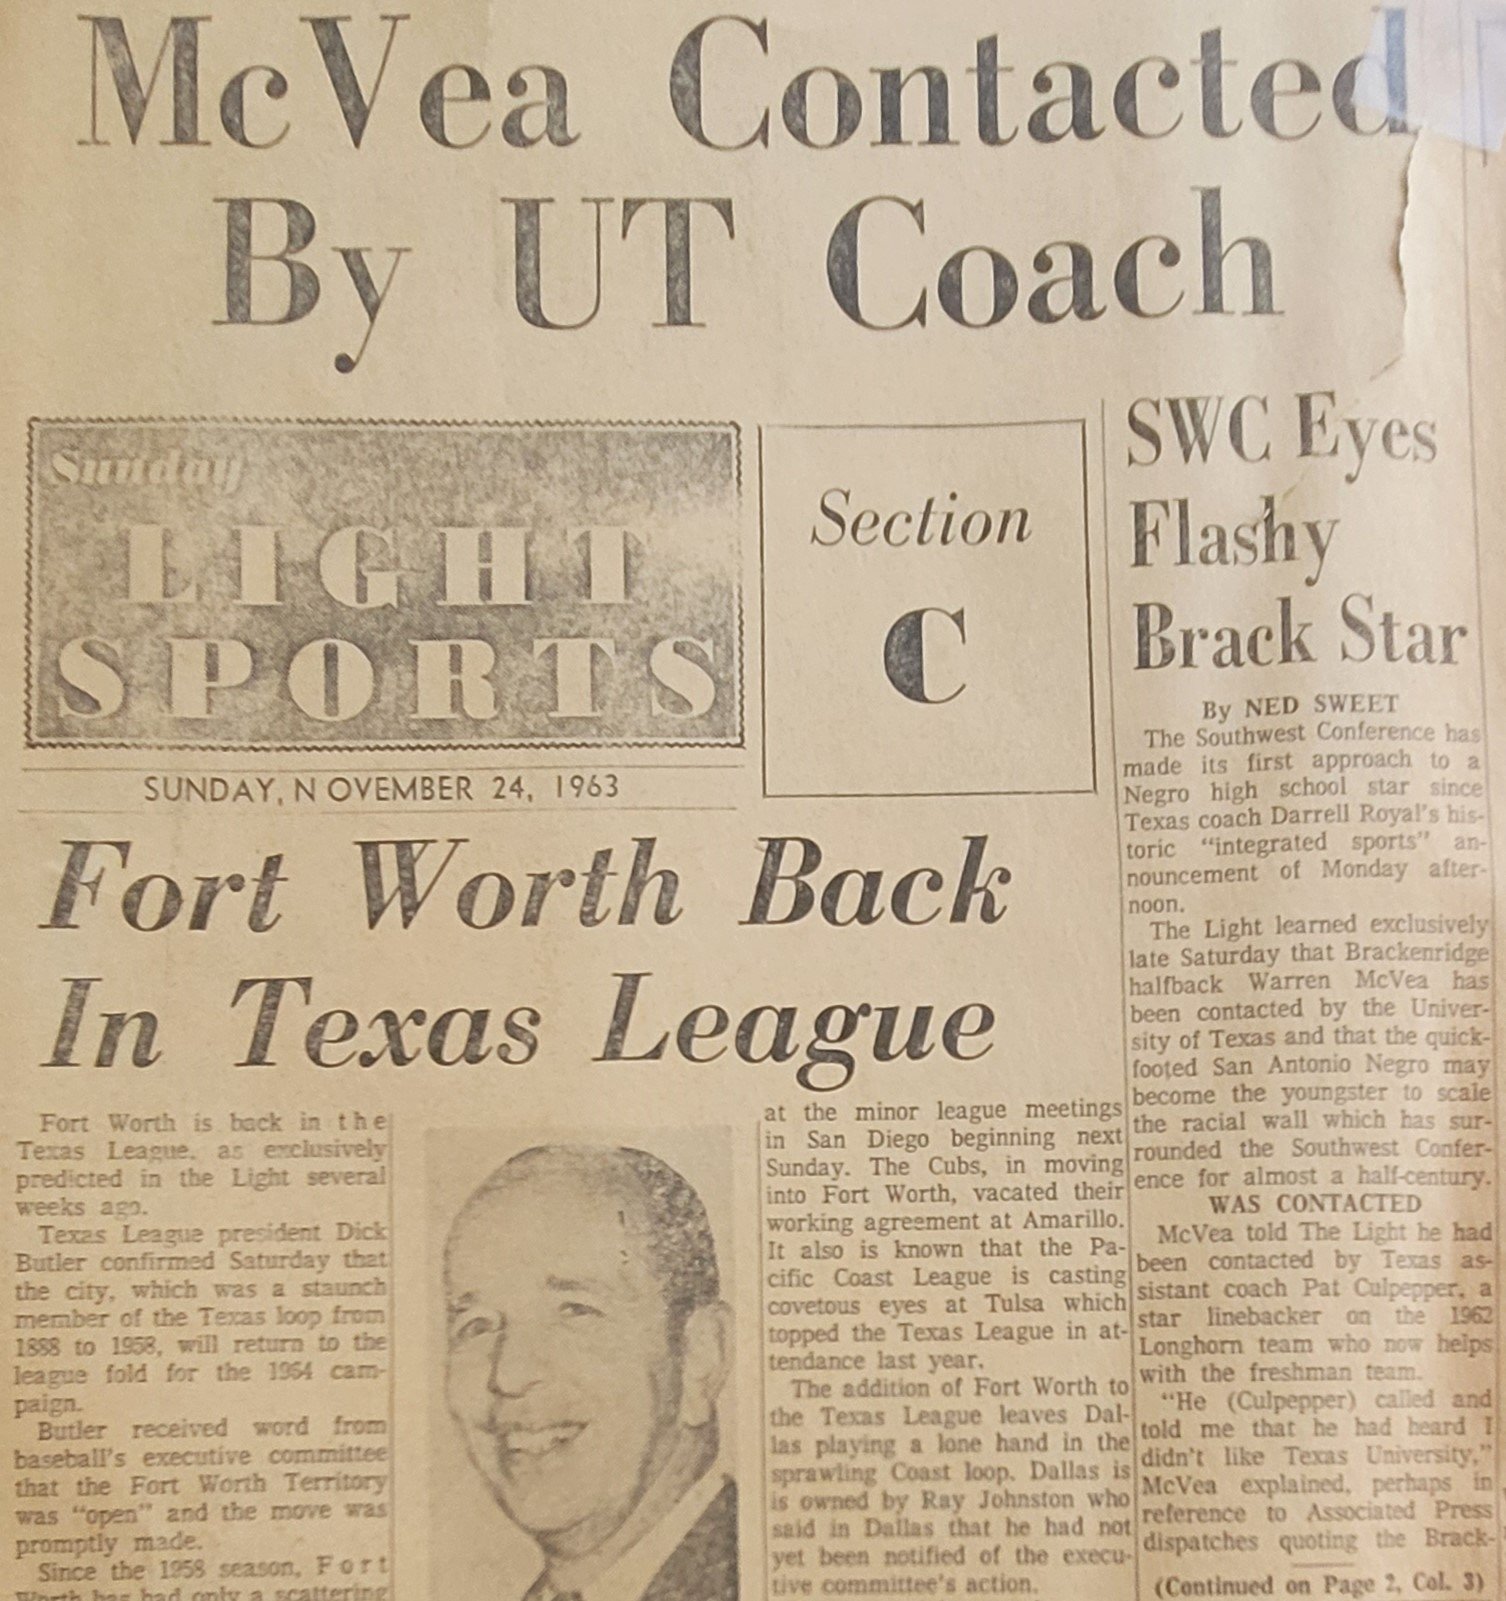  1963 Integration- recruiting McVea 